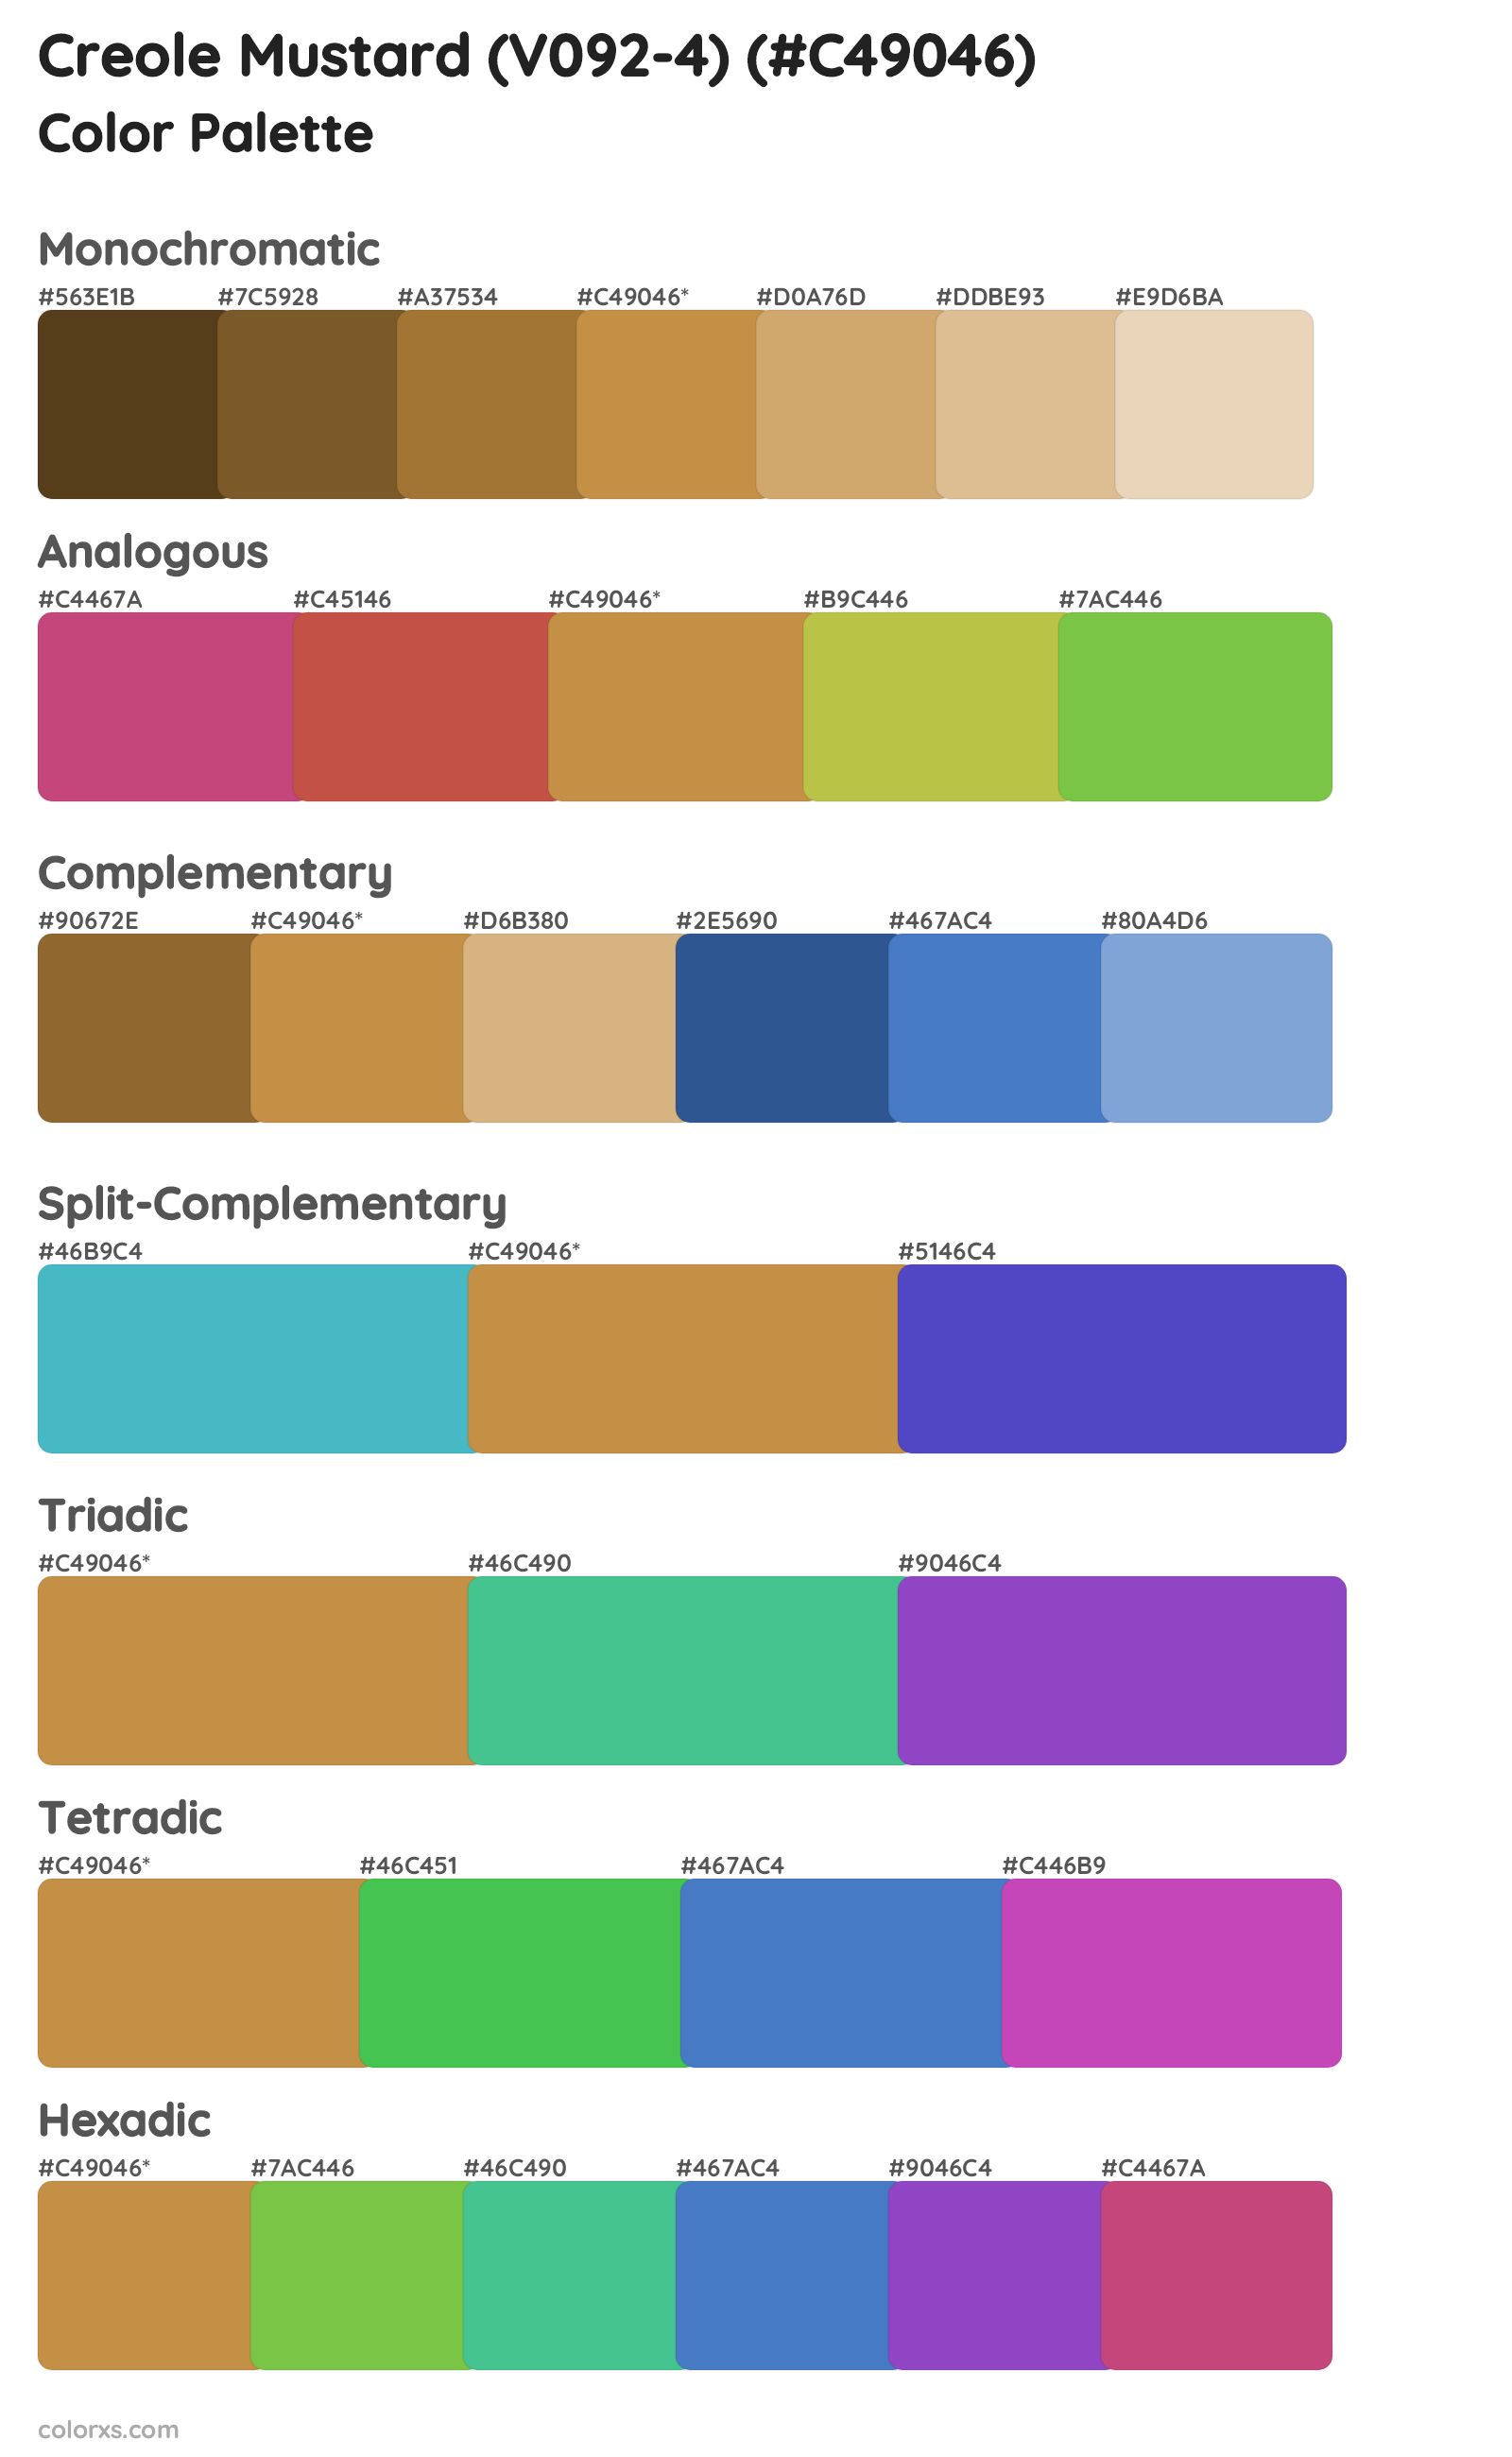 Creole Mustard (V092-4) Color Scheme Palettes